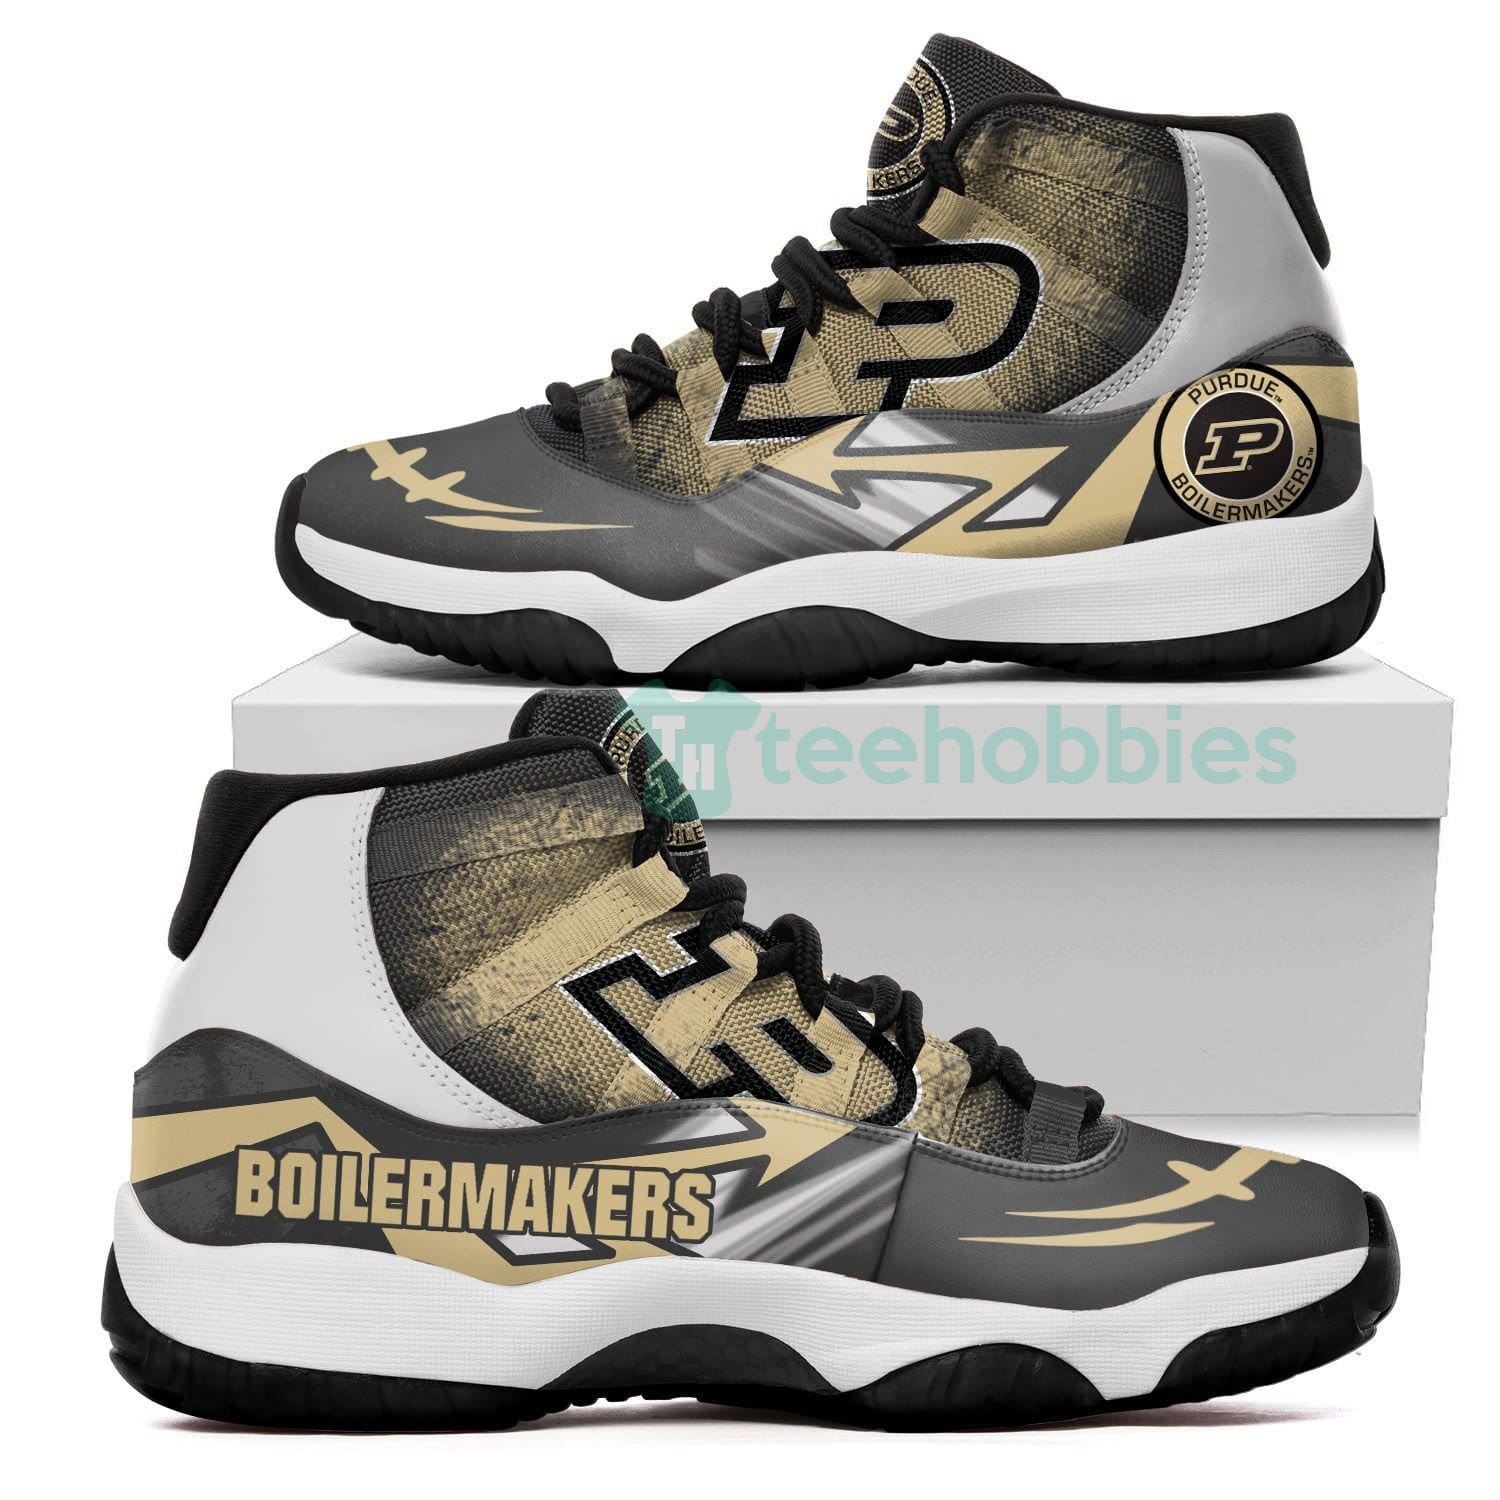 Purdue Boilermakers New Air Jordan 11 Shoes Fans Product photo 1